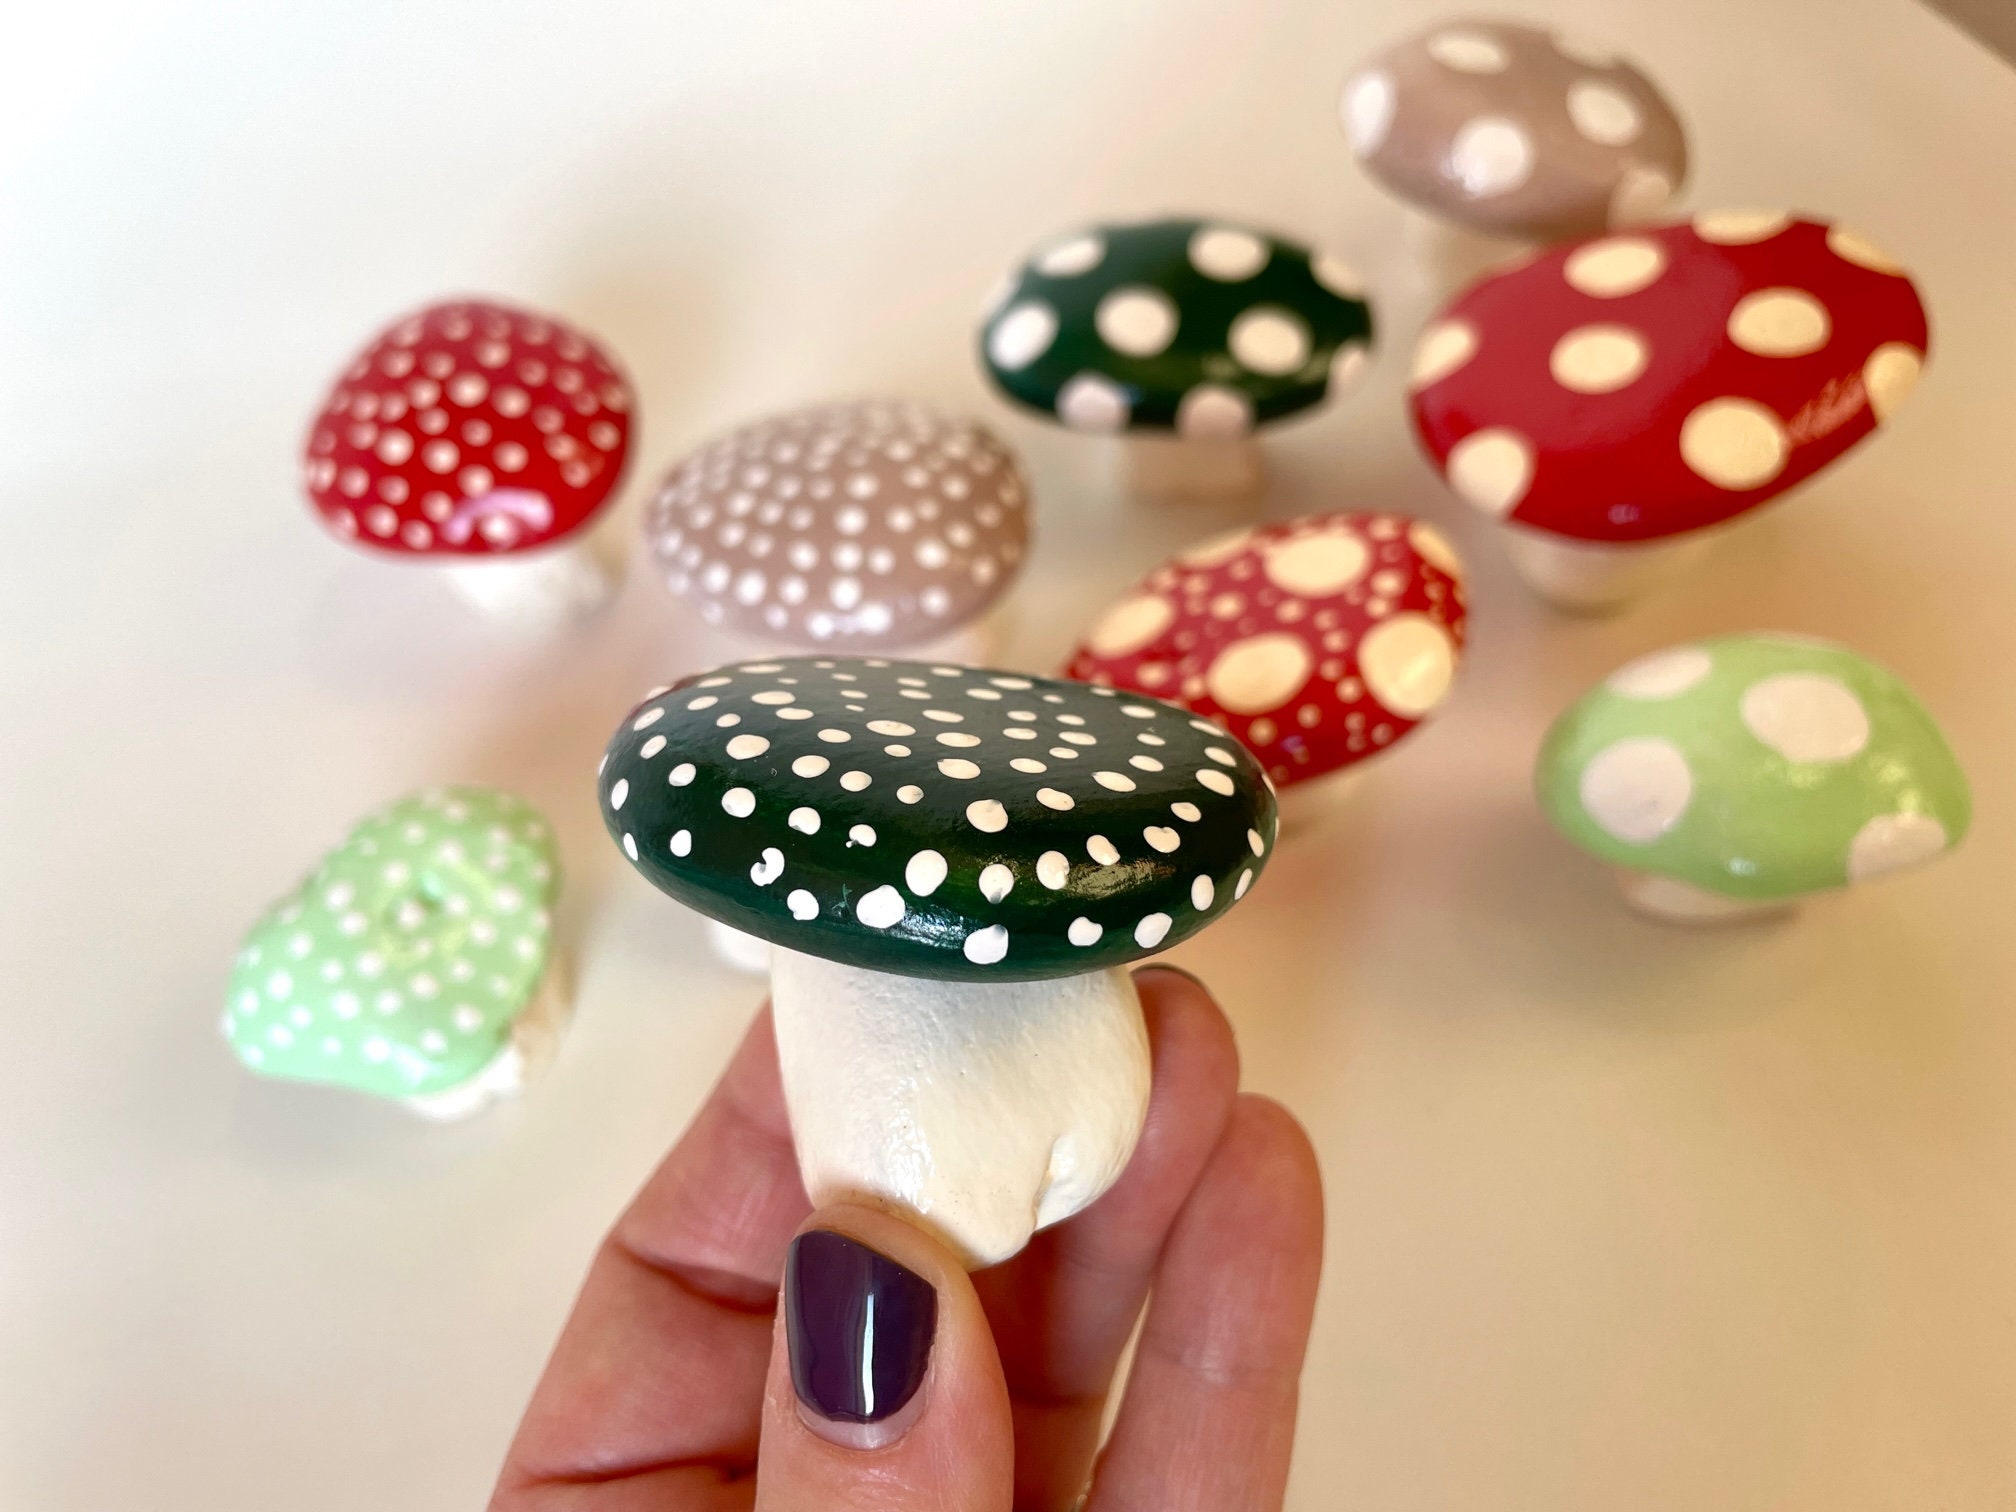 How to Paint Mushroom Rocks That's Super Simple